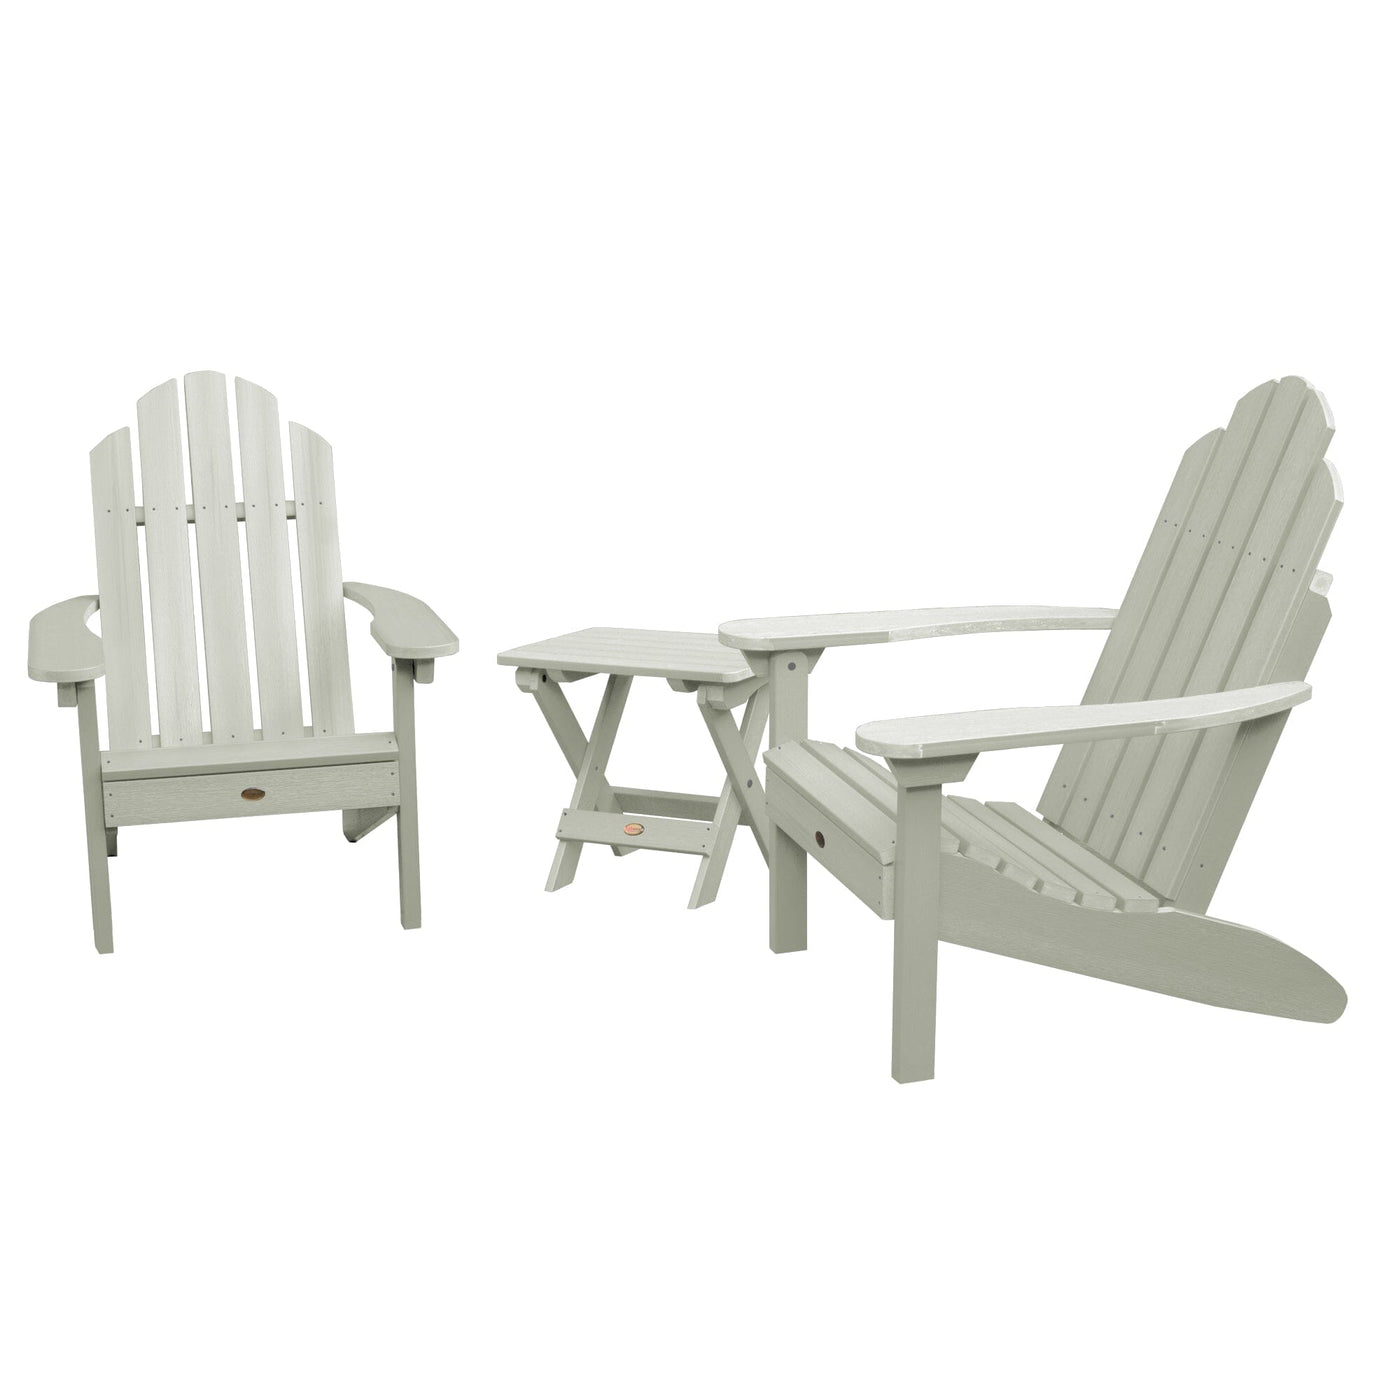 2 Classic Westport Adirondack Chairs with 1 Adirondack Folding Side Table Kitted Sets Highwood USA Eucalyptus 